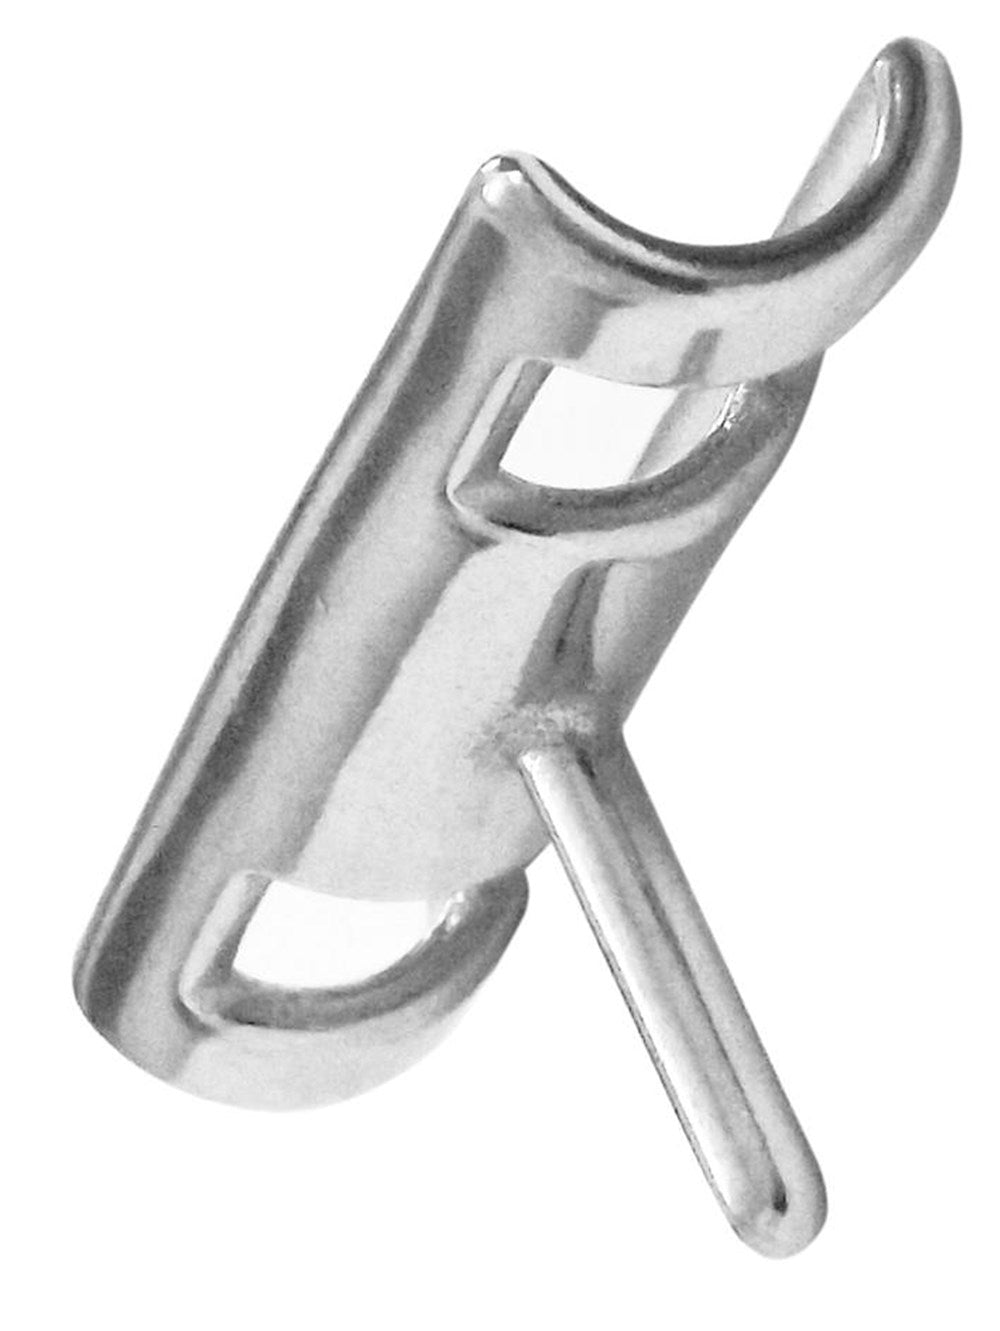 ISC Keeloc St/St Wire Key (U-Shape)